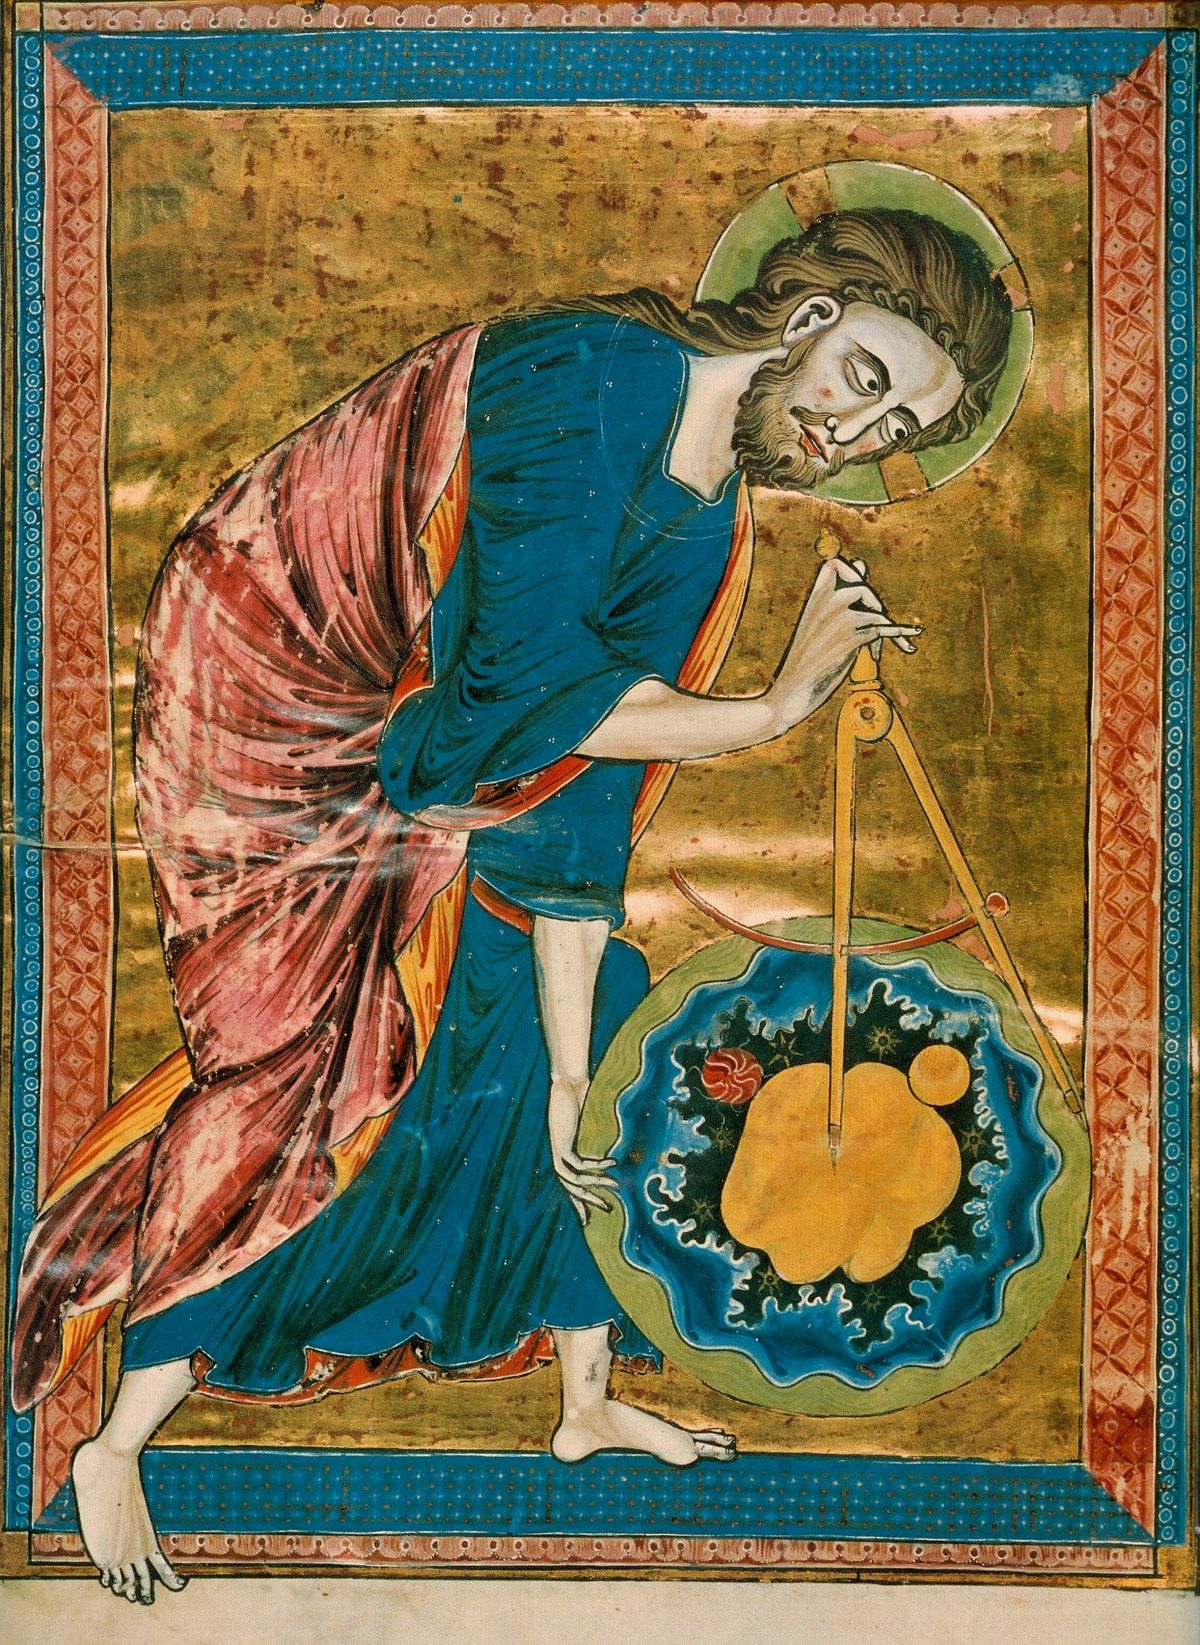 Biblical cosmology - Wikipedia